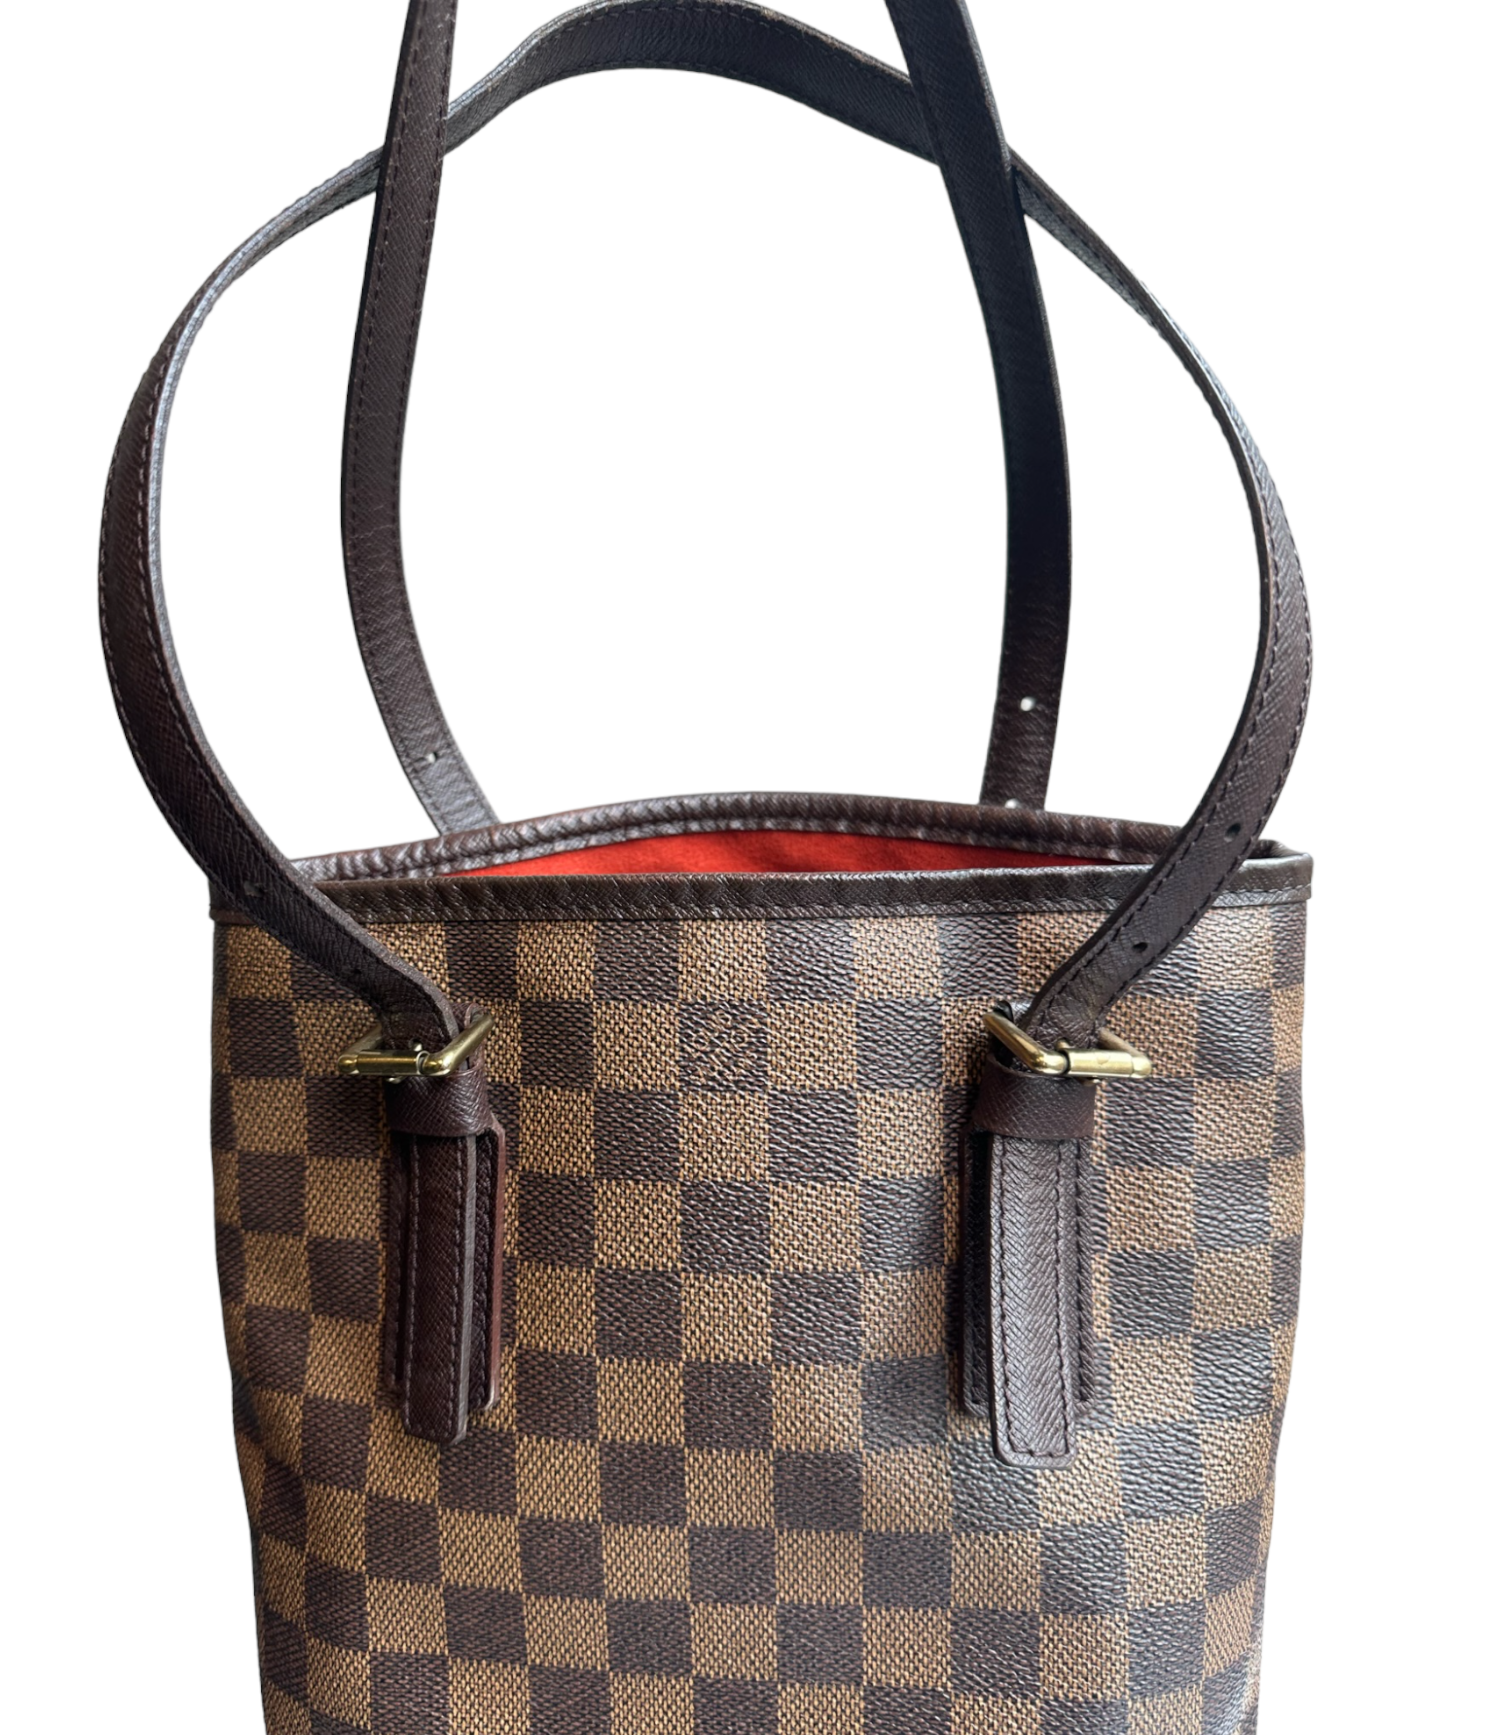 This Louis Vuitton bucket bag in damier ebene print on @miloutjioe